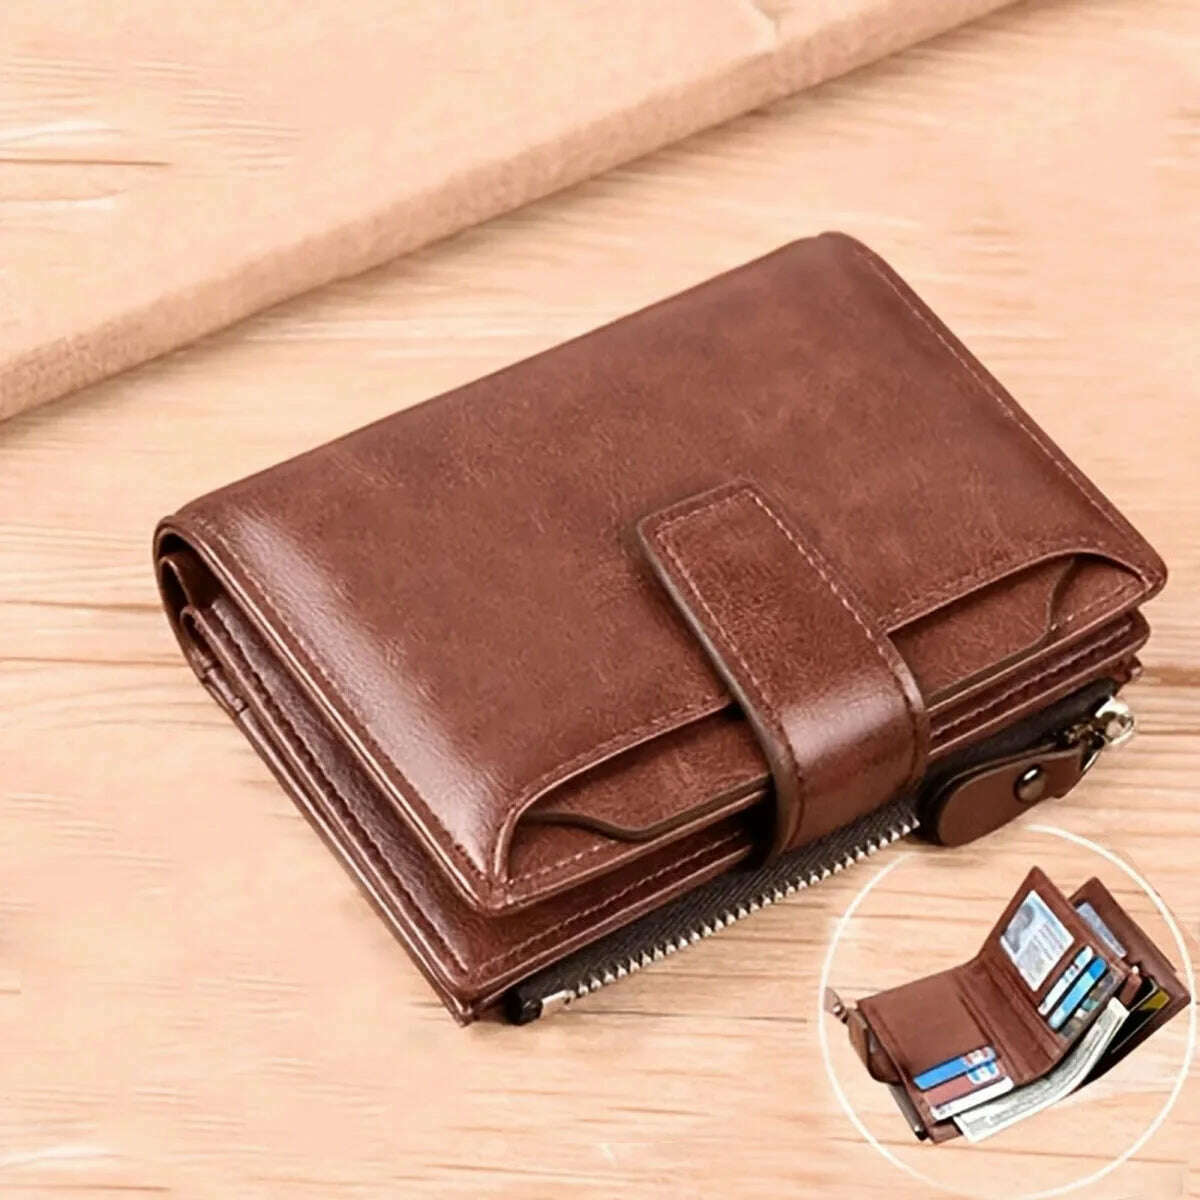 KIMLUD, Men's Coin Purse Wallet RFID Blocking Man PU Leather Wallet Zipper Business Card Holder Money Bag Wallet Male, No LOGO Brown, KIMLUD Women's Clothes